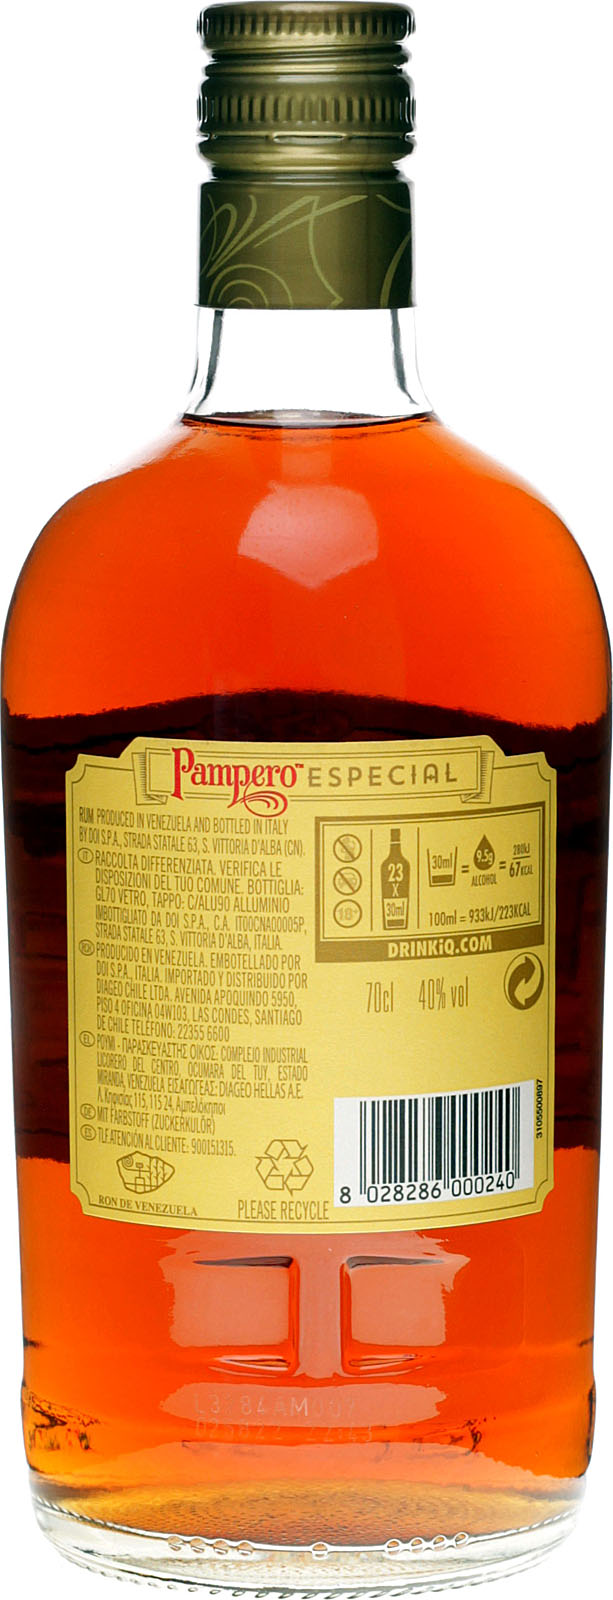 Especial Liter 0,7 Anejo mit Pampero Ron kaufen